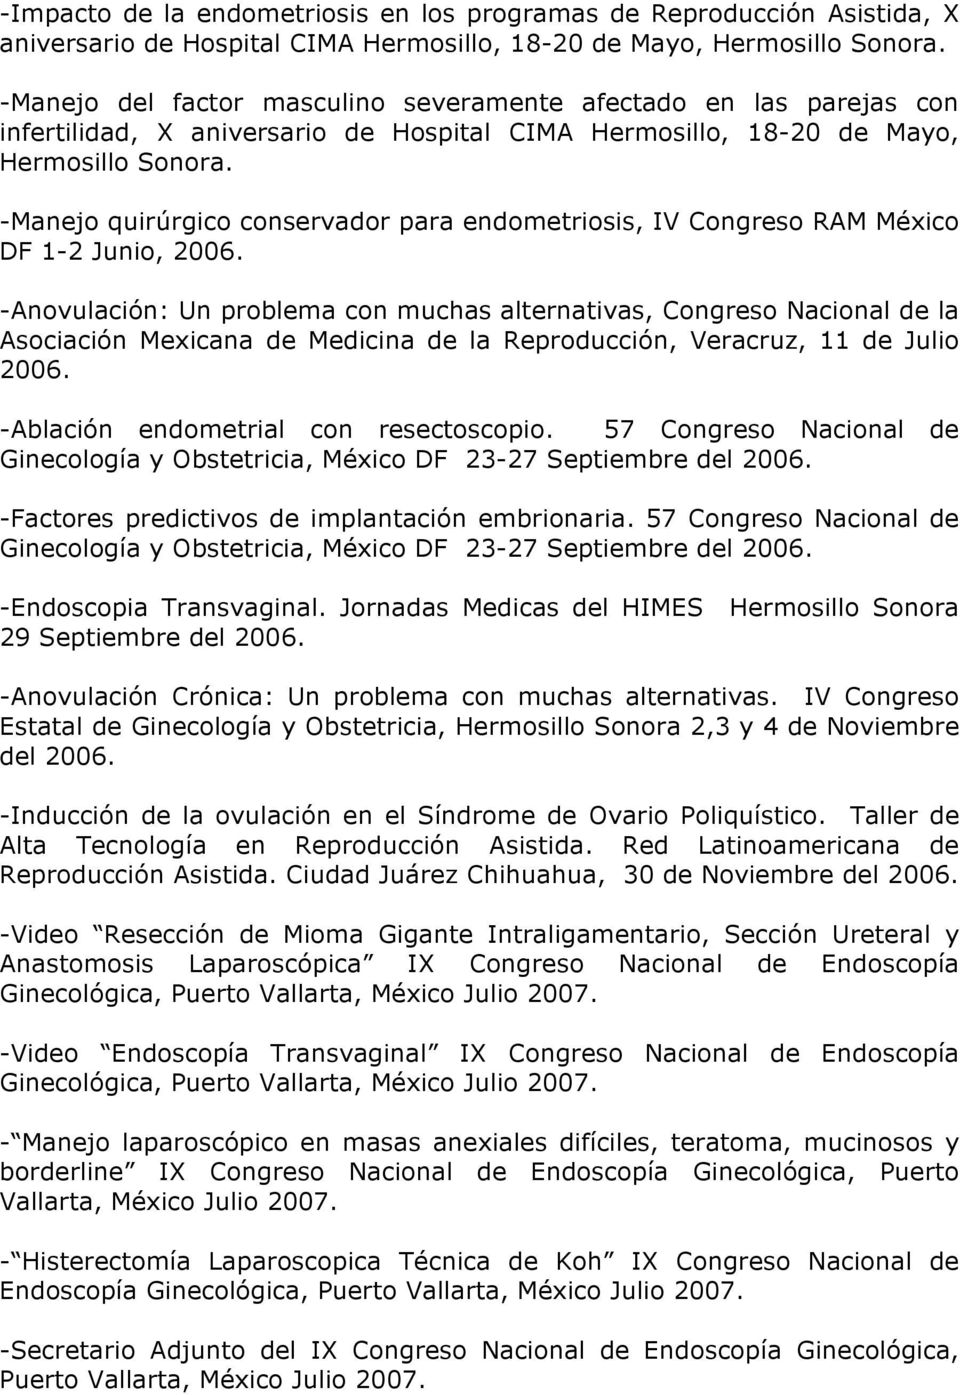 -Manejo quirúrgico conservador para endometriosis, IV Congreso RAM México DF 1-2 Junio, 2006.